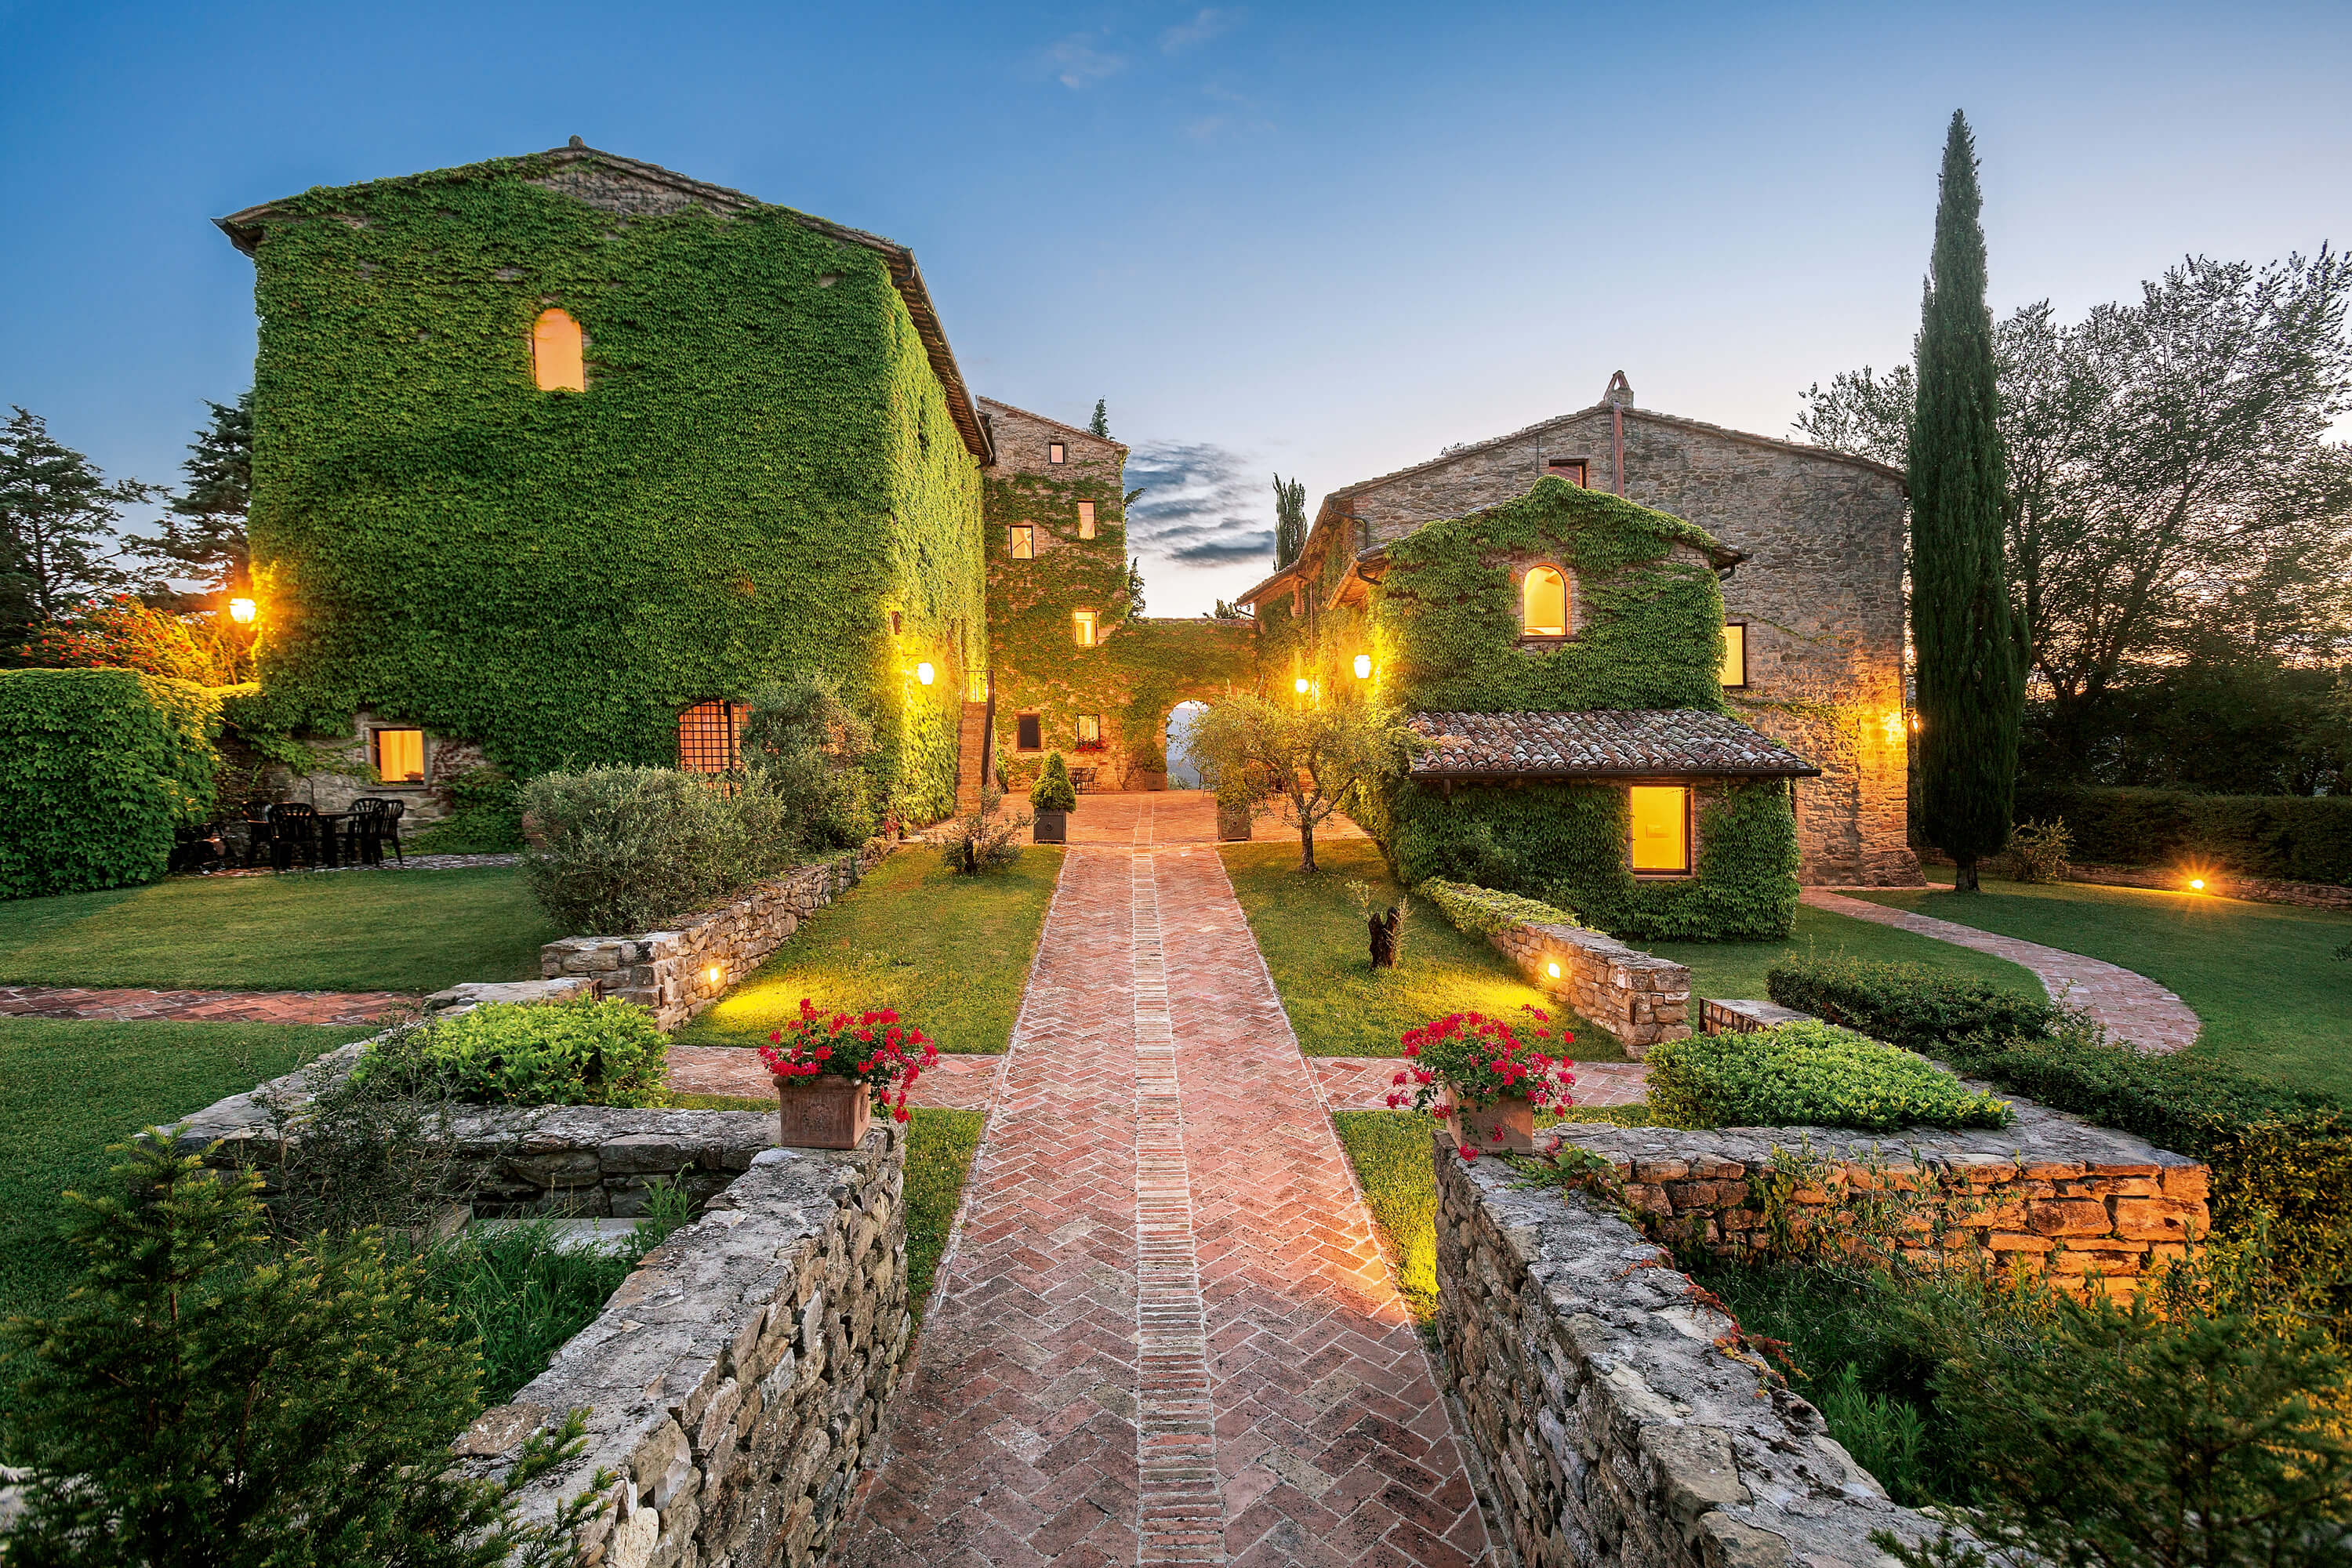 Borgo Bastia Creti - properties linked by traditional stone paths